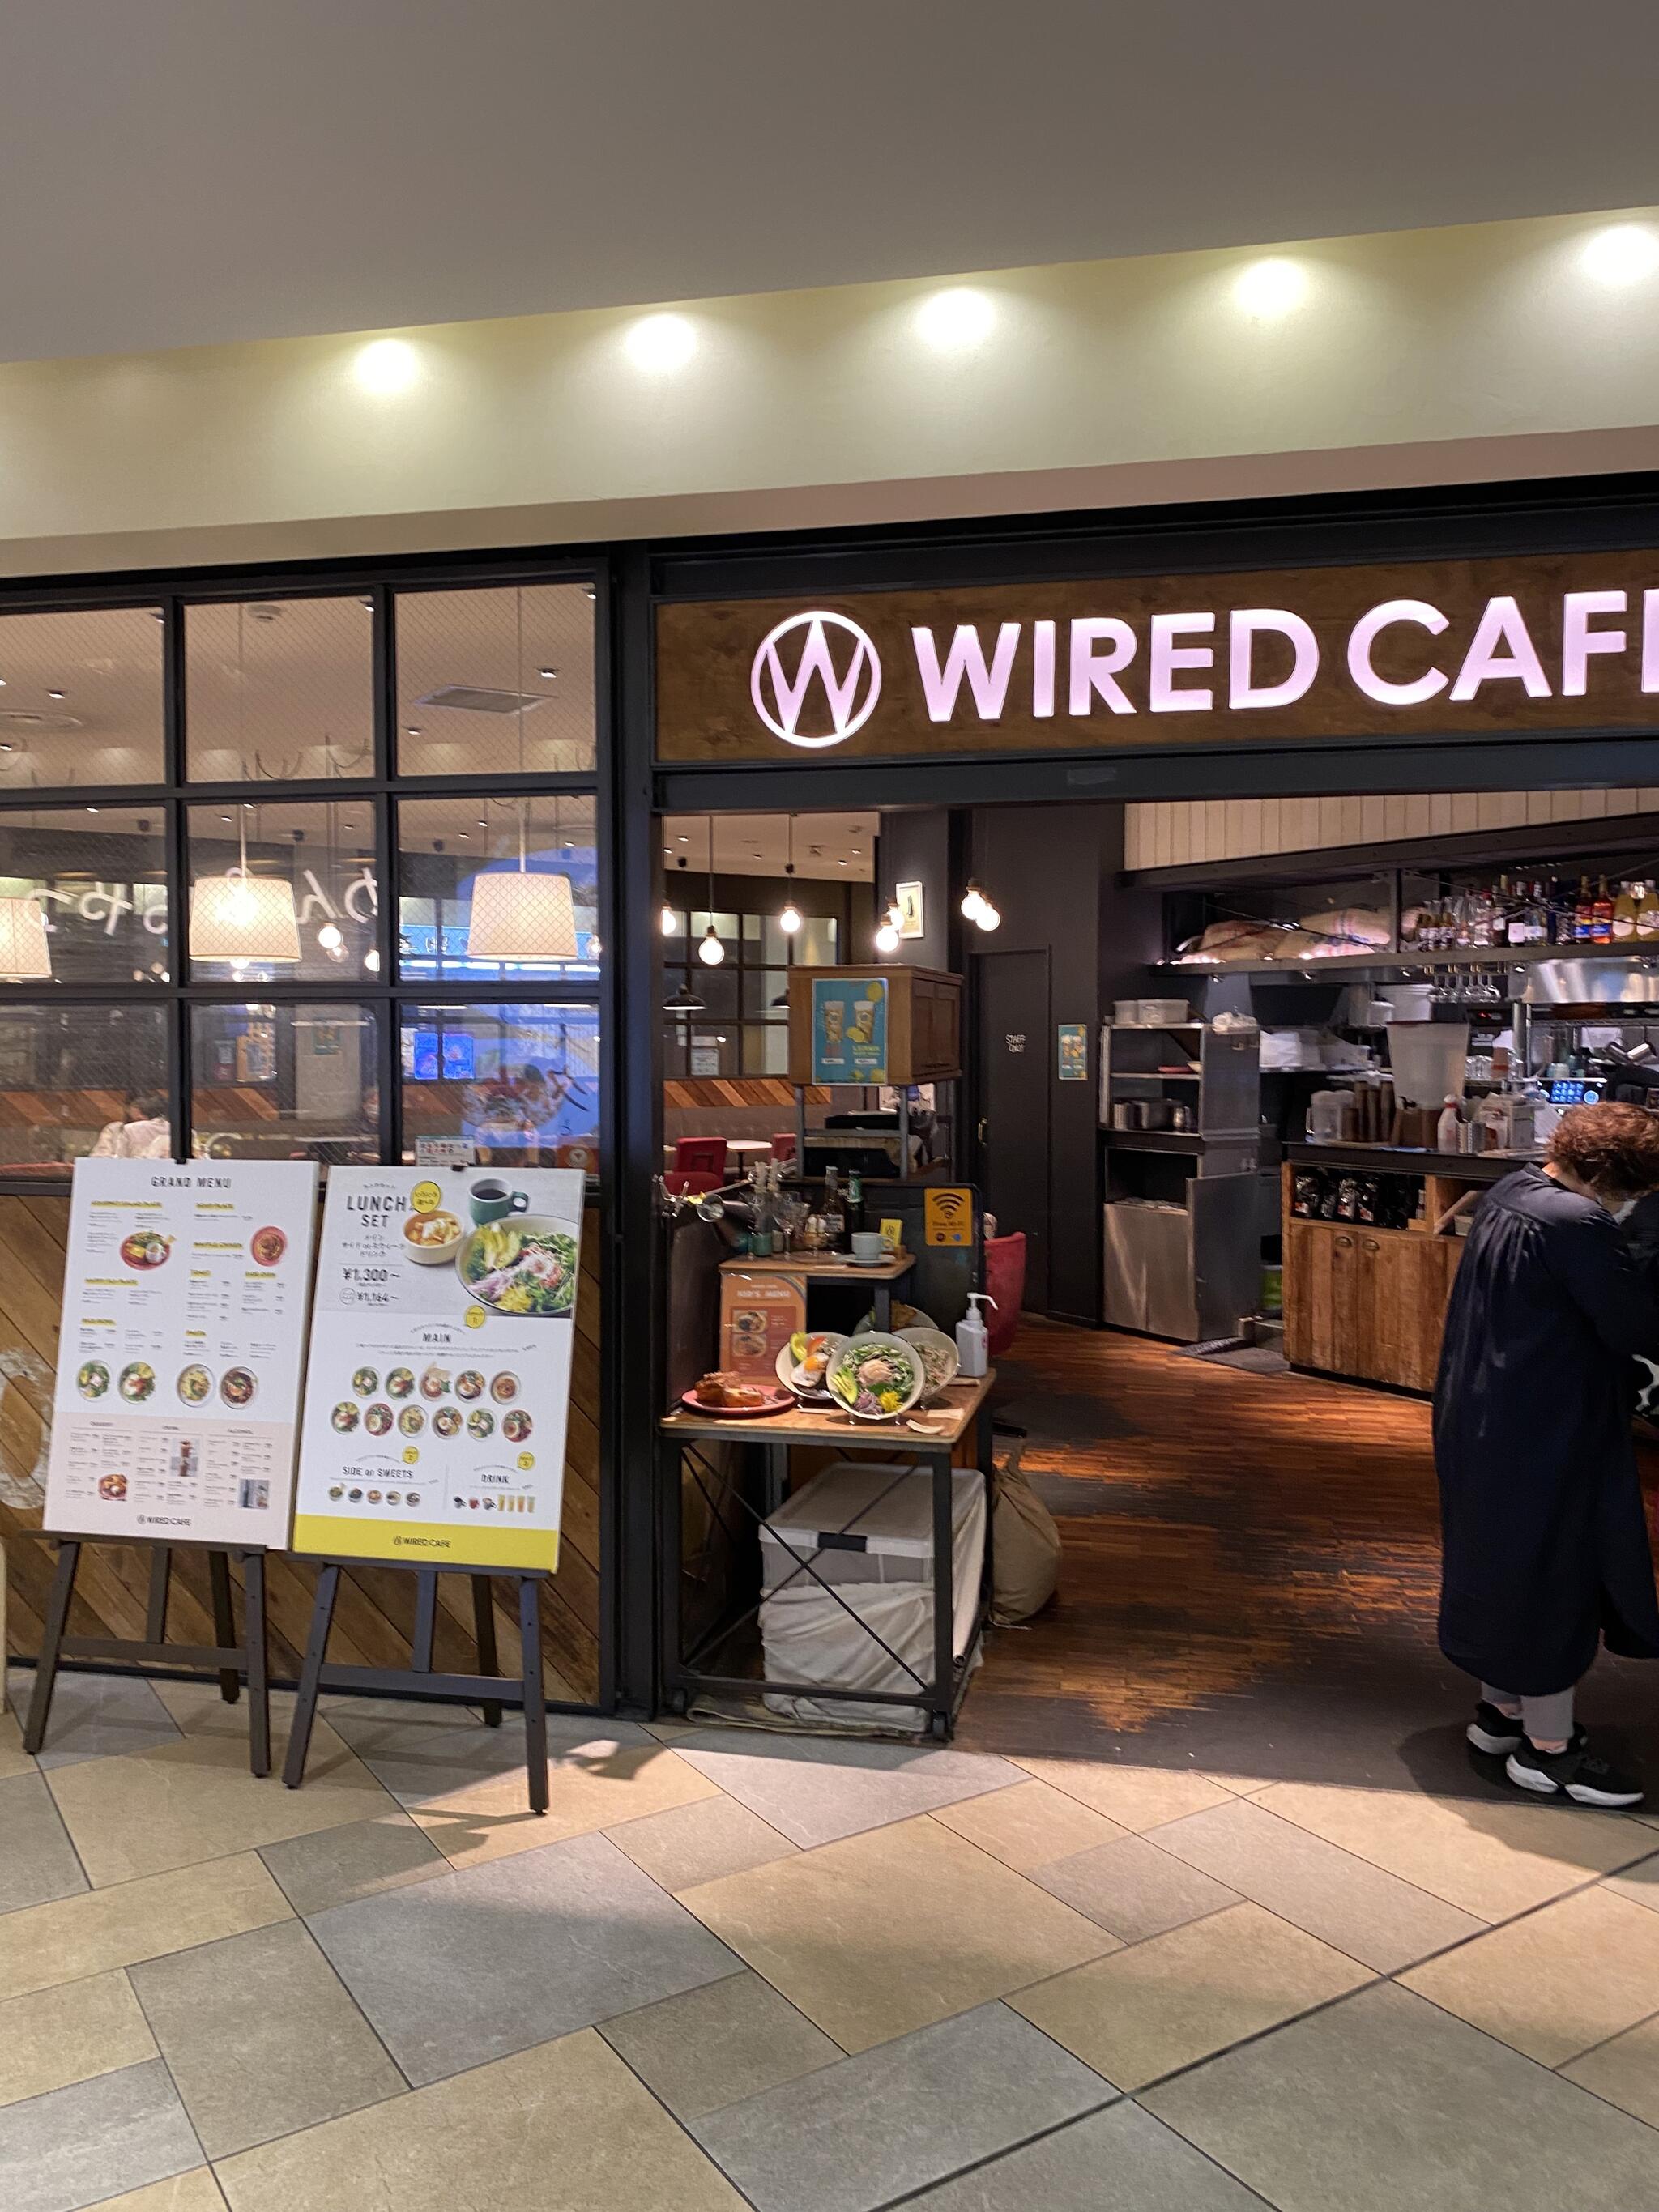 WIRED CAFE 武蔵小杉東急スクエア店の代表写真7